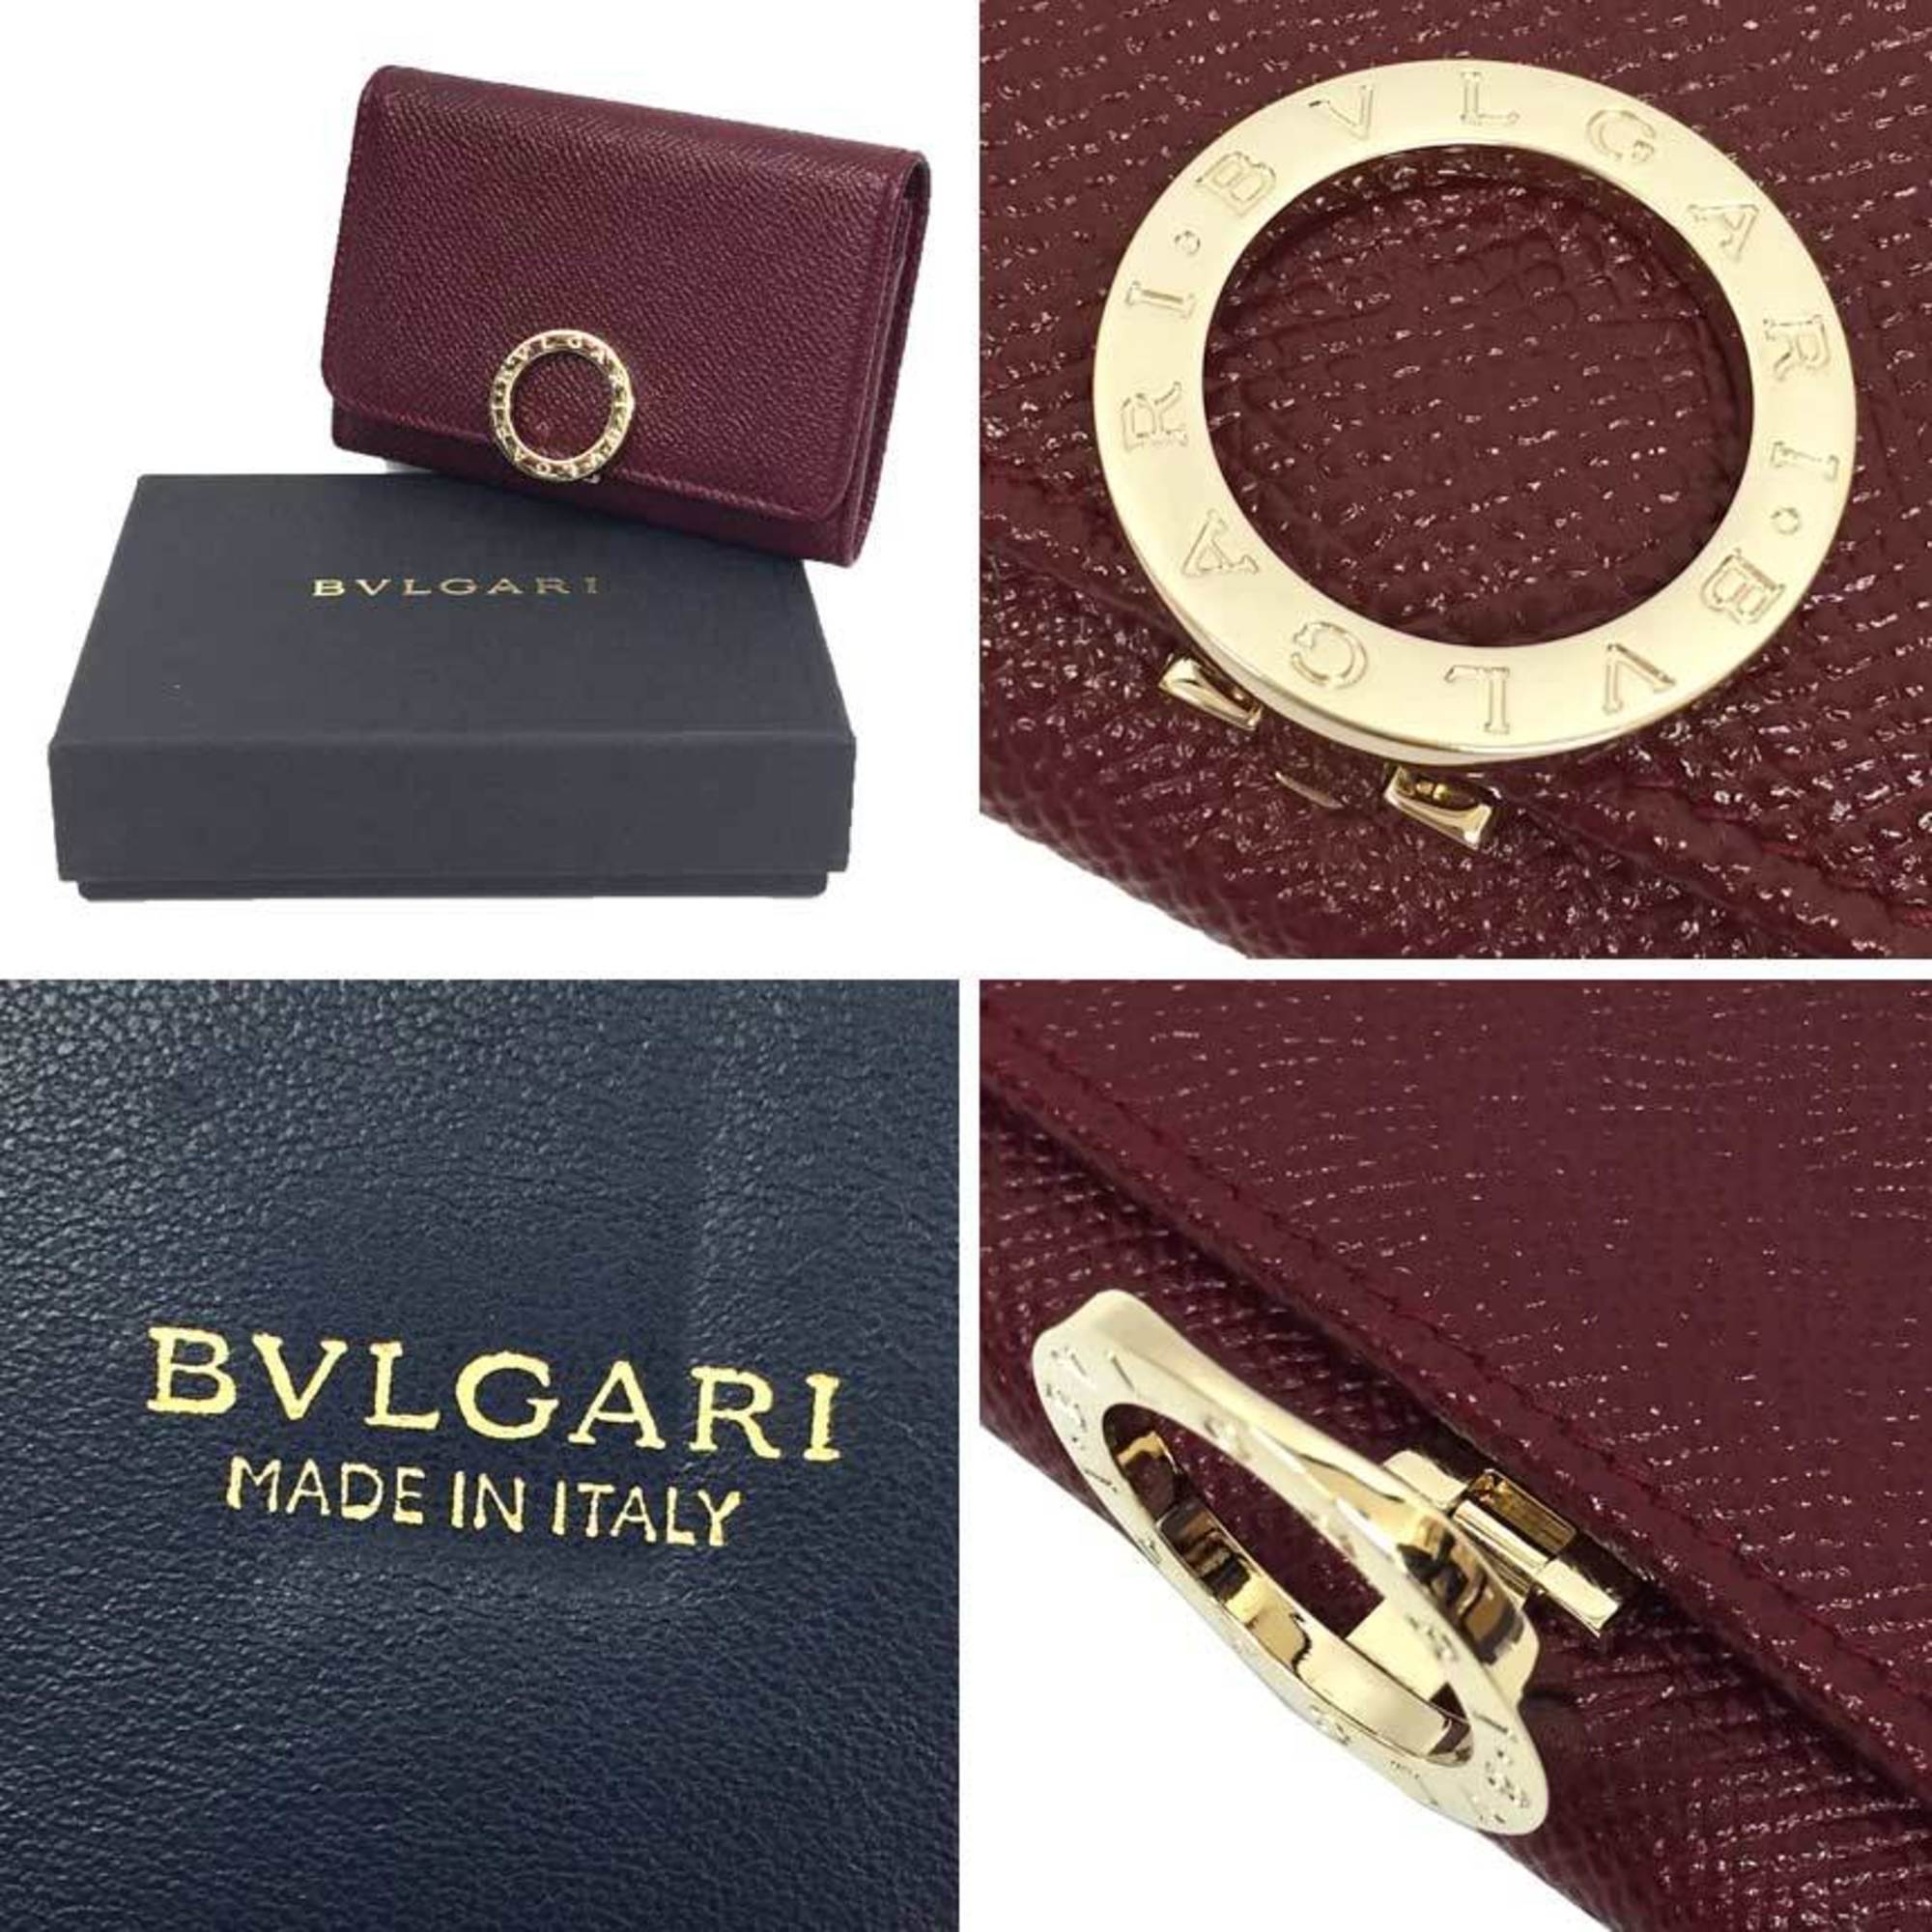 Bvlgari BVLGARI BB Clip Business Card Holder Case 30420 Grain Leather Burgundy Wallet Men's